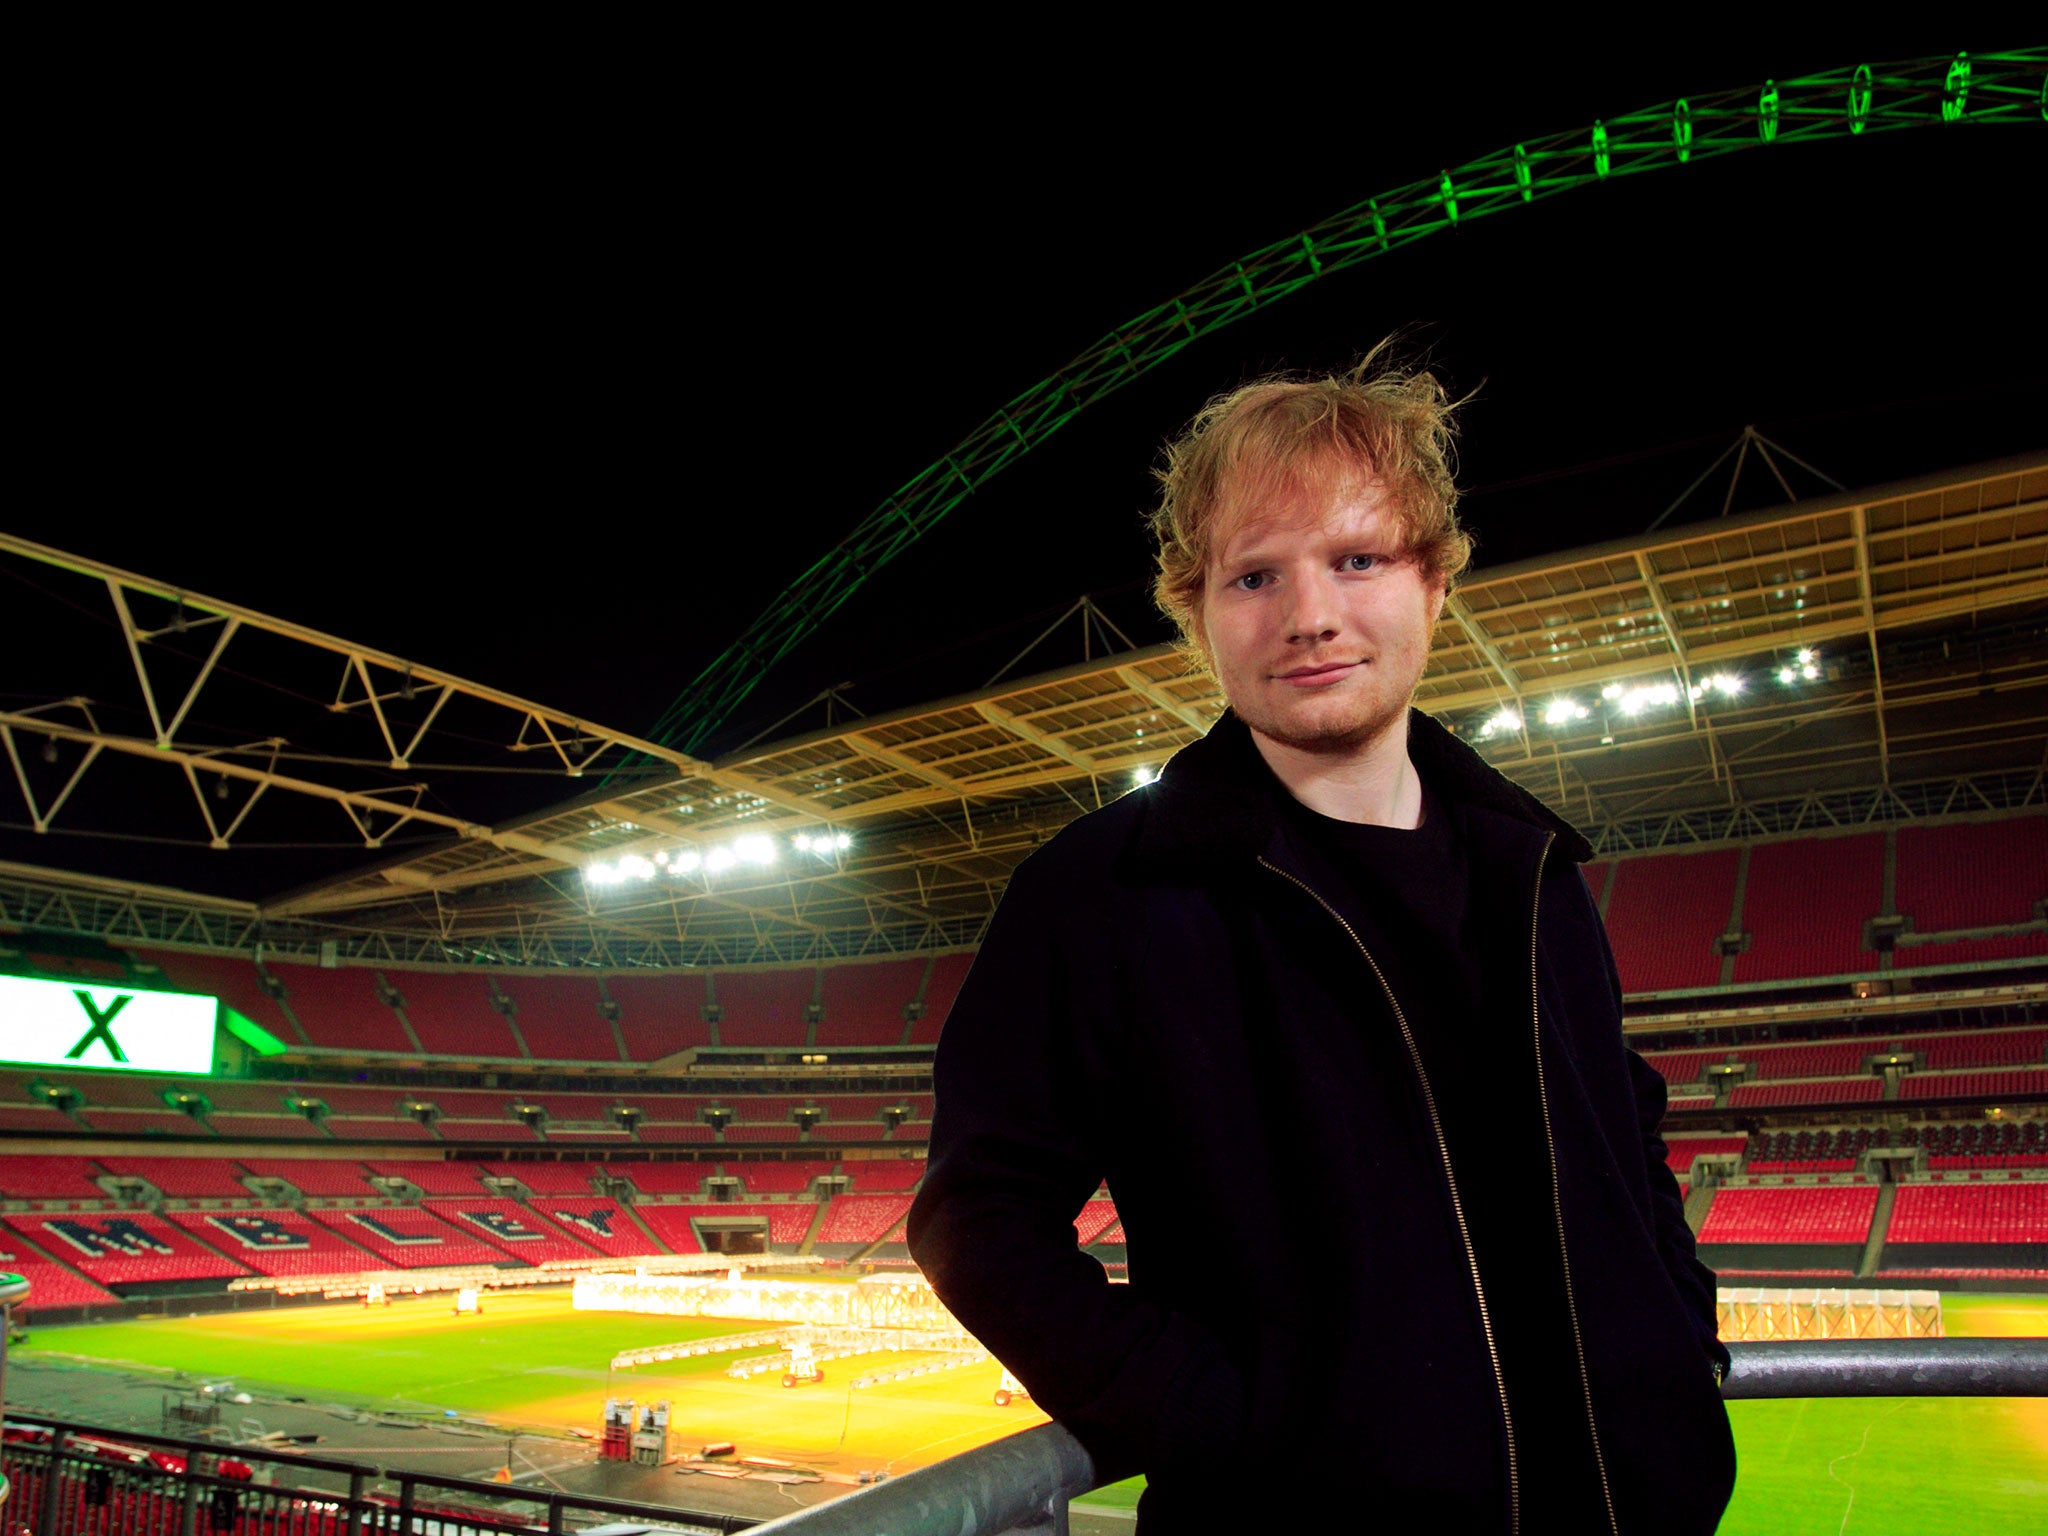 Ed Sheeran will play three sell-out gigs at Wembley Stadium in July